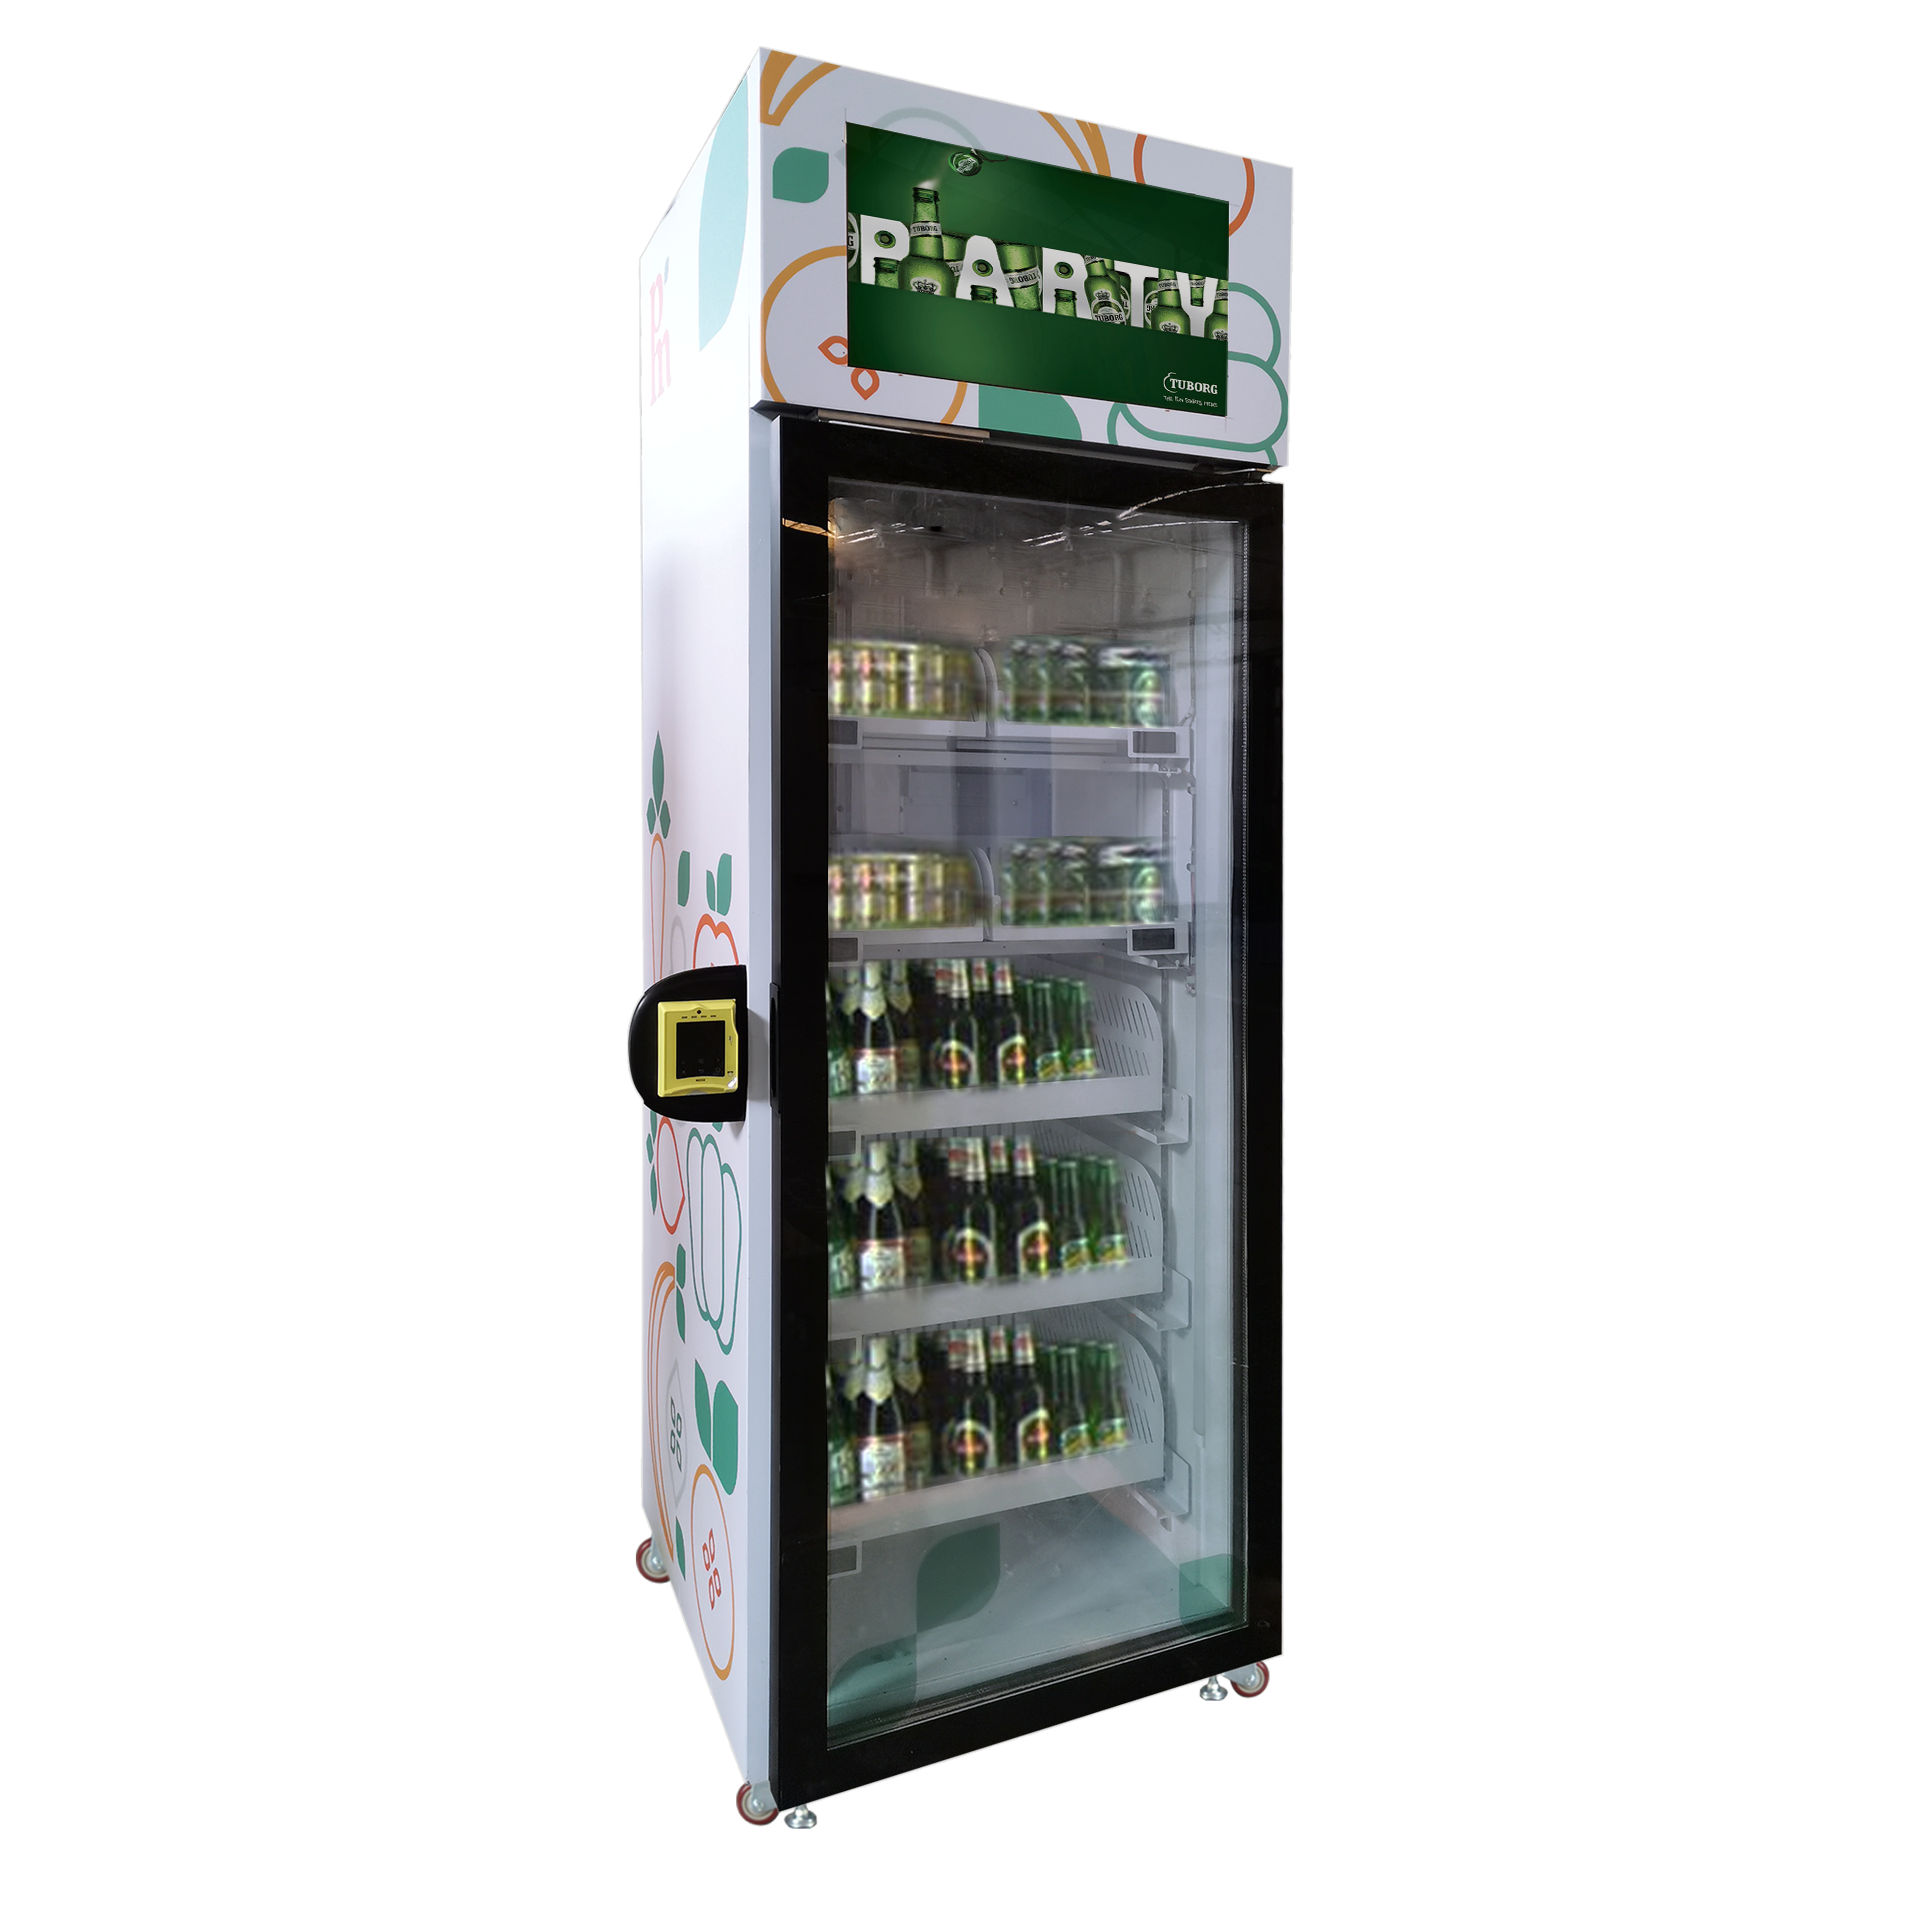 Micron smart fridge vending machine